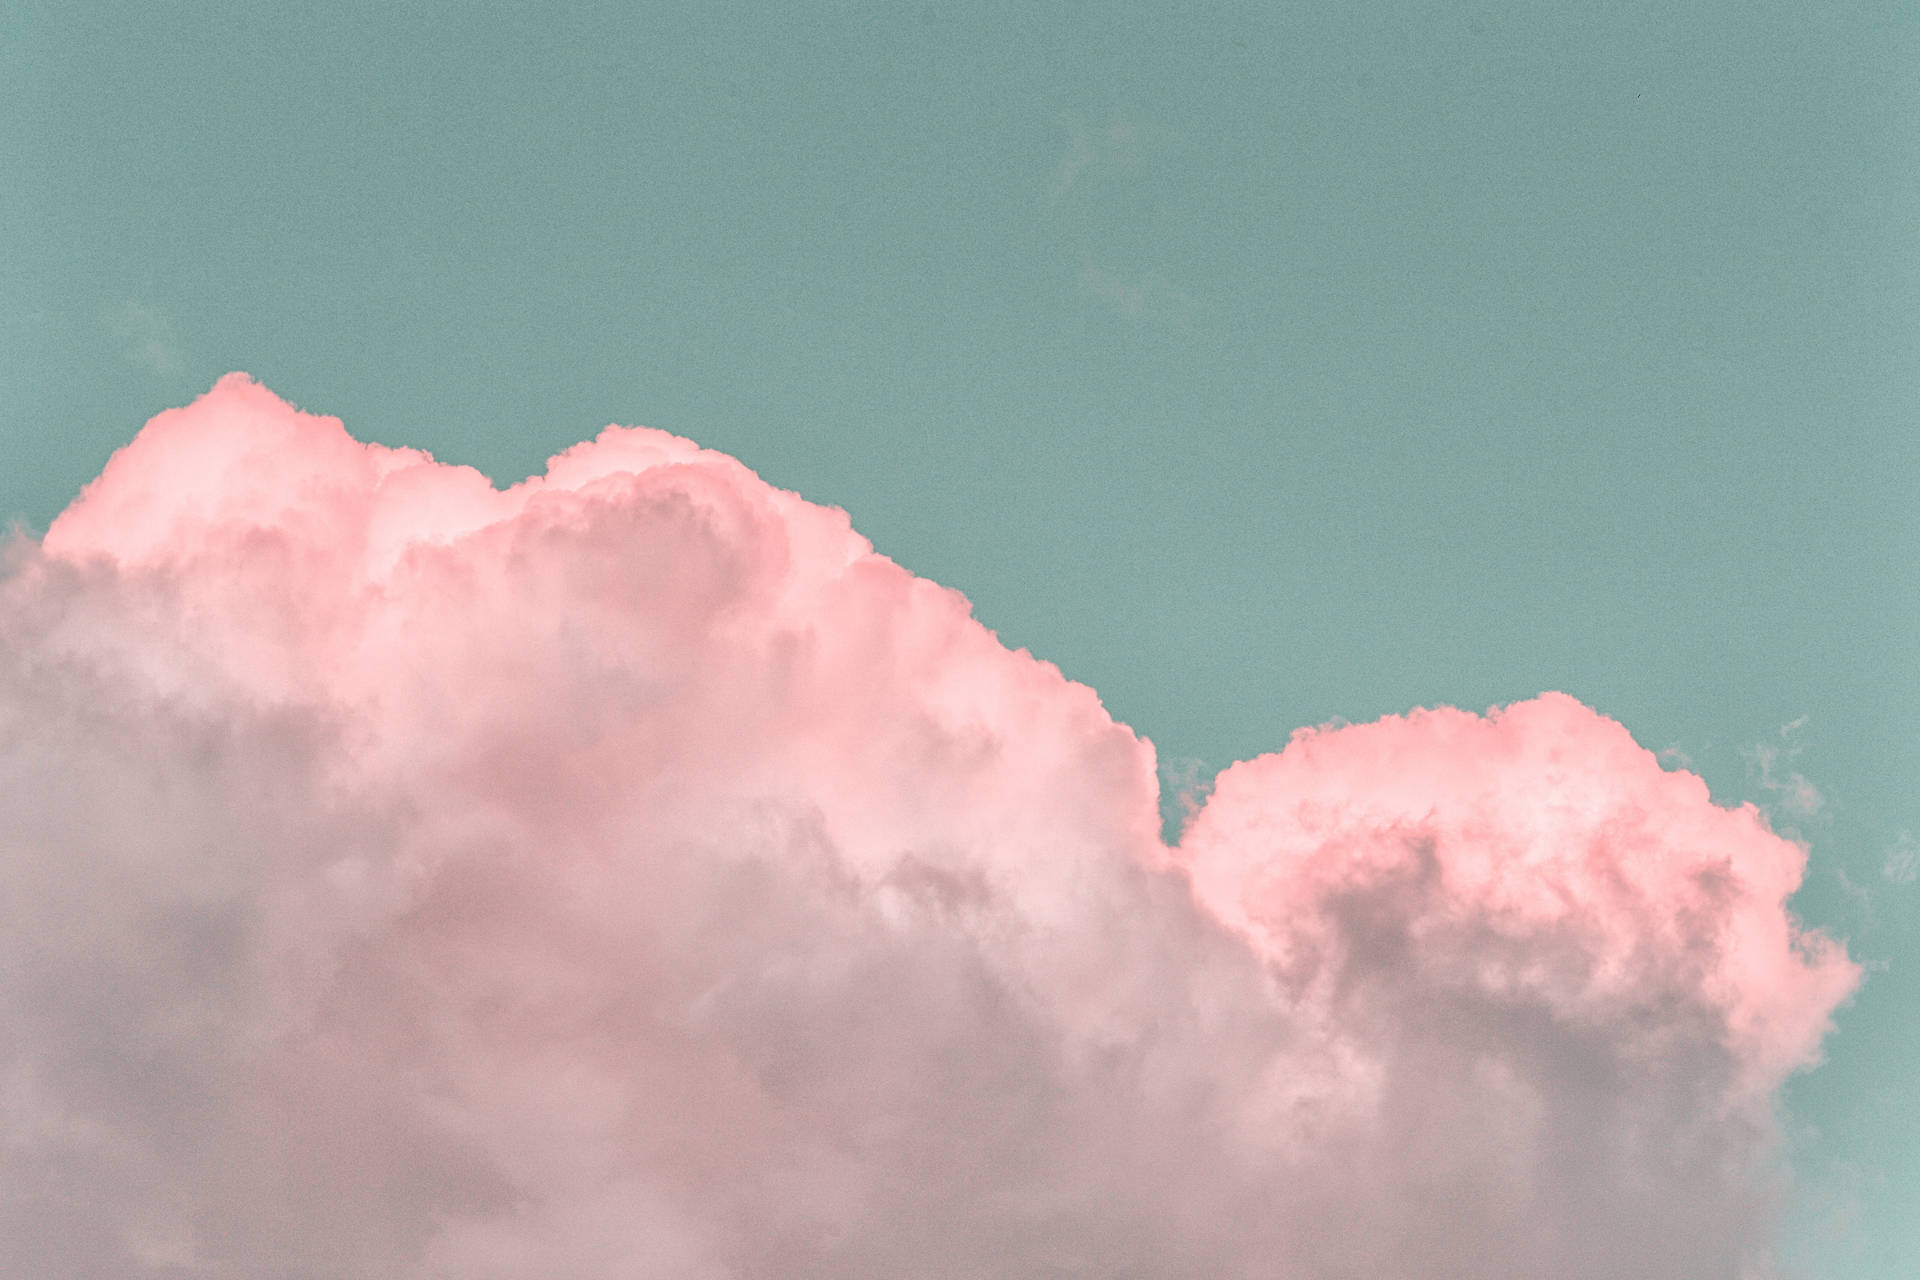 'a Dreamy Pastel Sky Awaits' Background